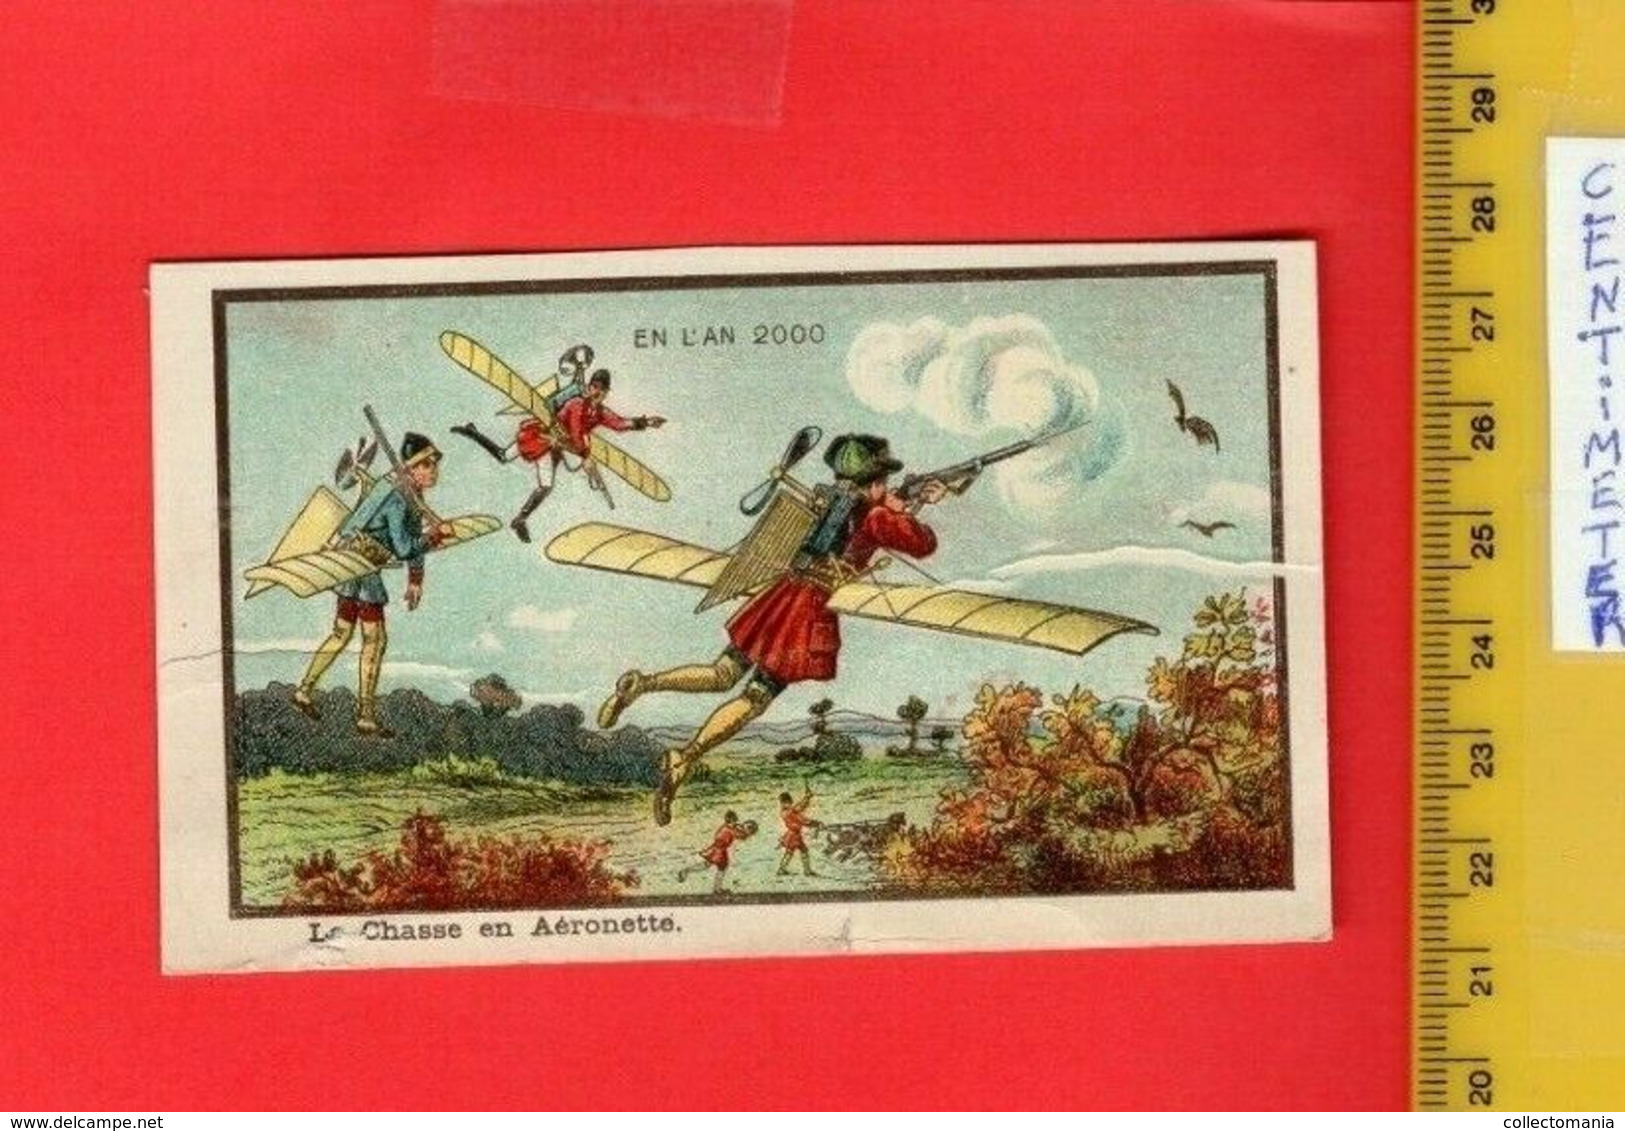 1 Trade Card Circa 1899 - Fantasy Future Year 2000, HUNTING By "drone" Humor, Fold - Chromo  Press Lithography S.F. - Vliegtuigen